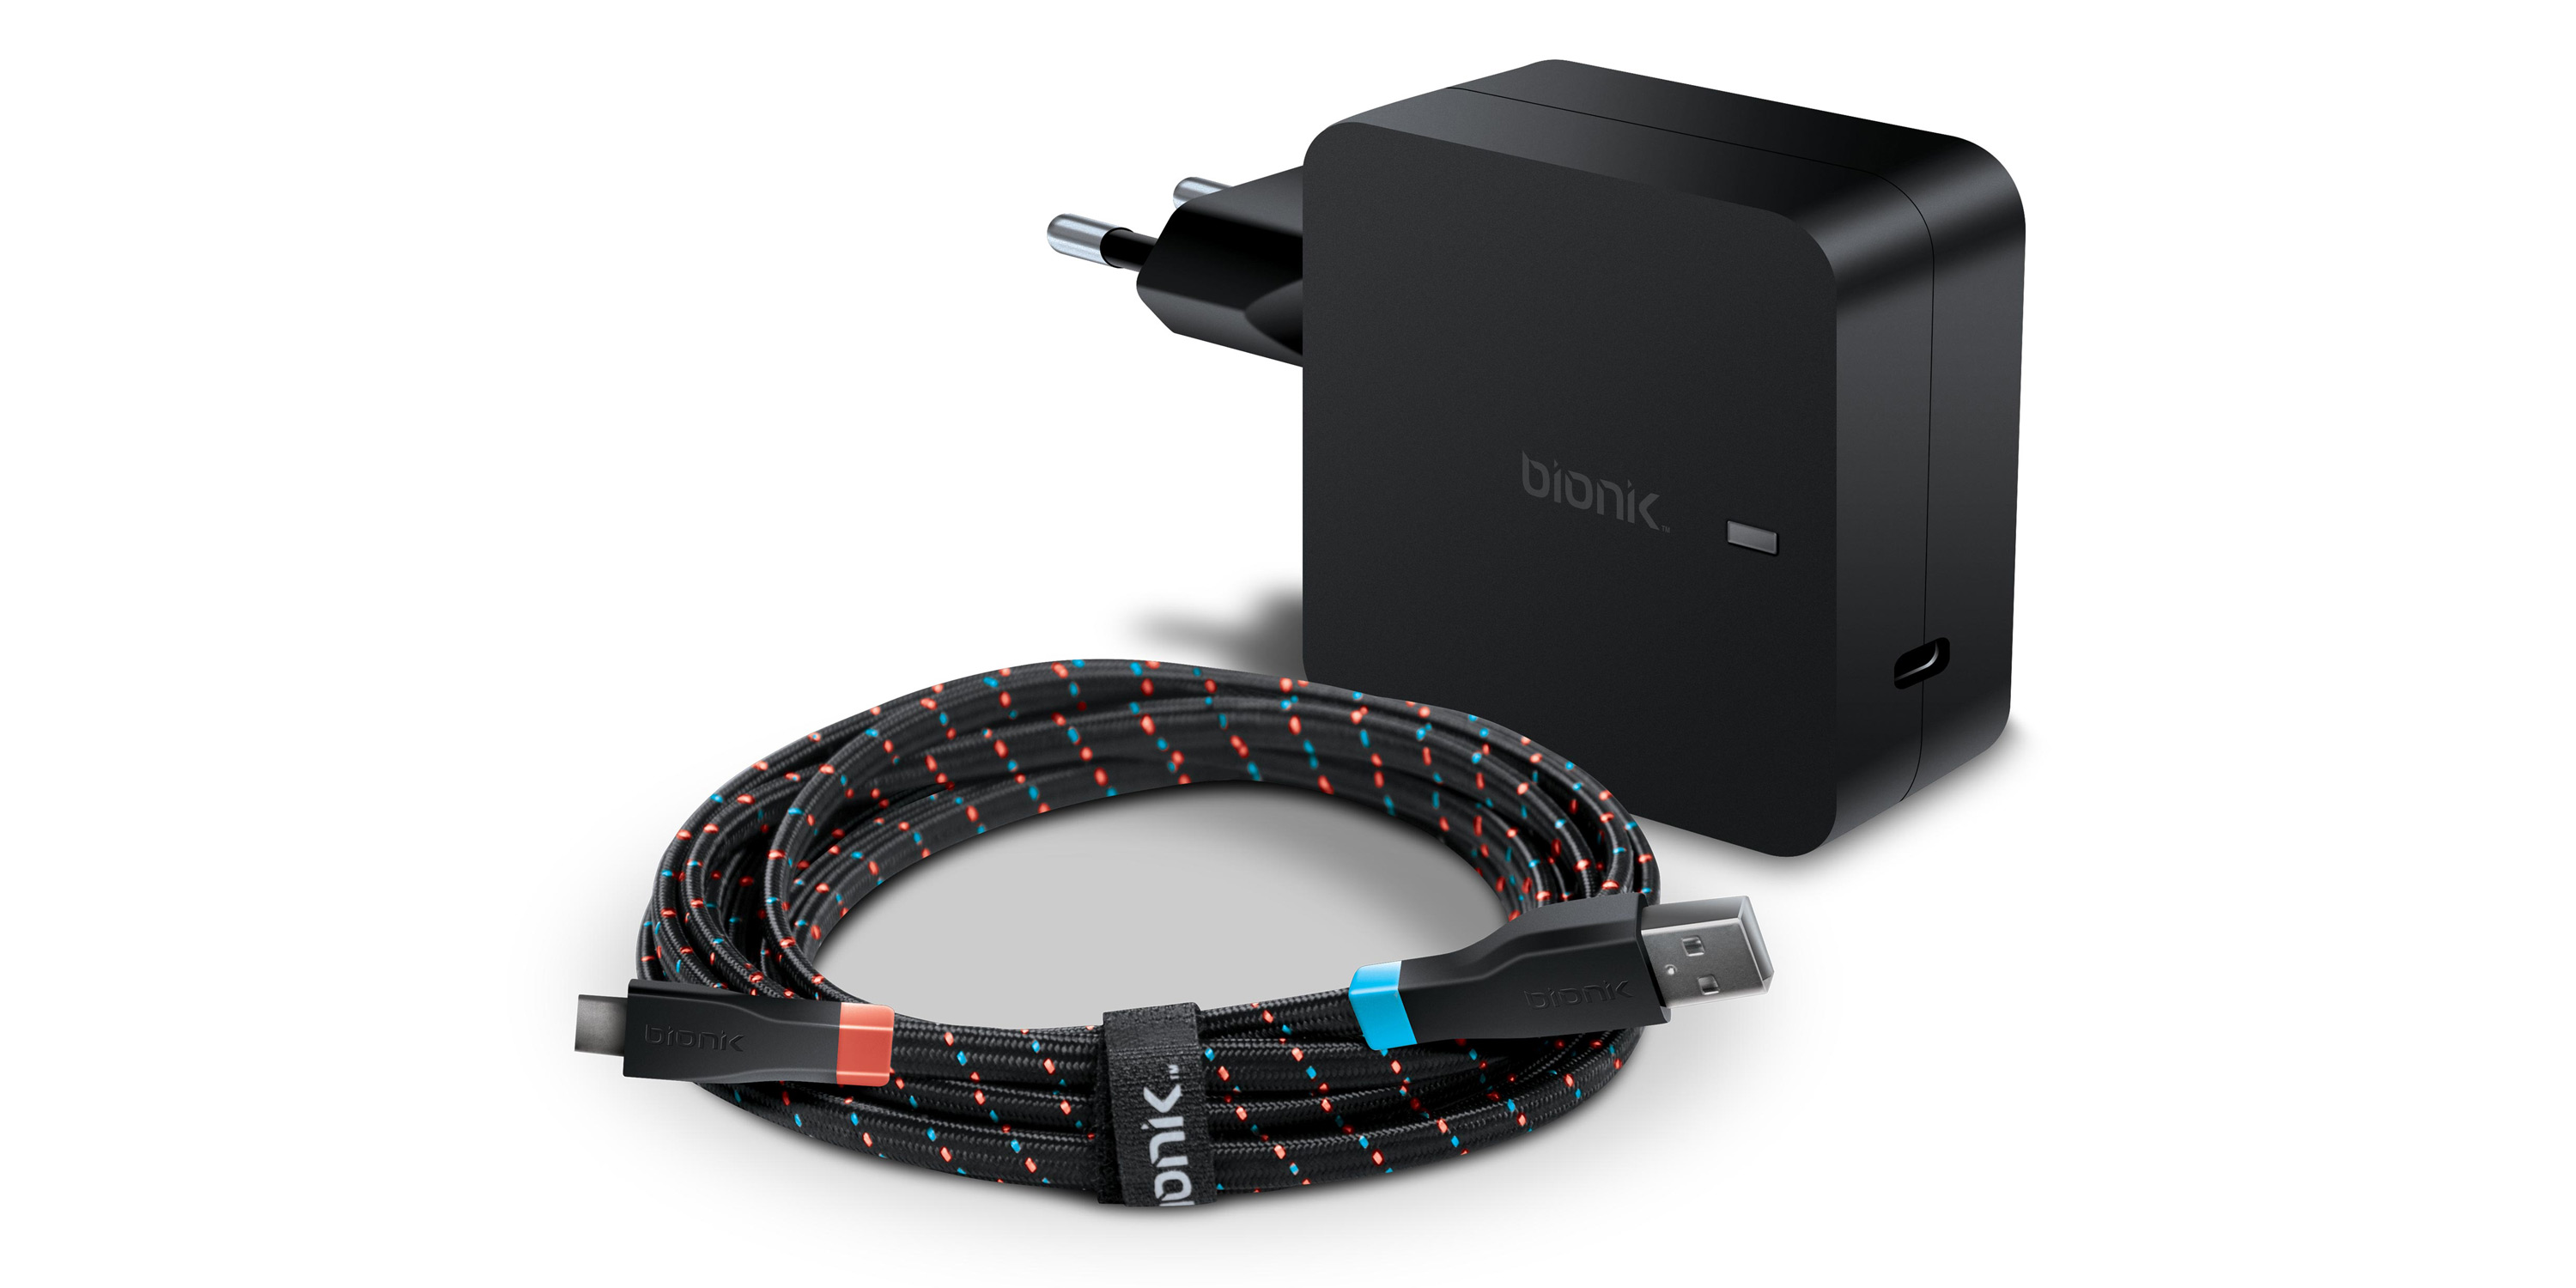 bionik charging accessories e3 2017 bionikswitch03